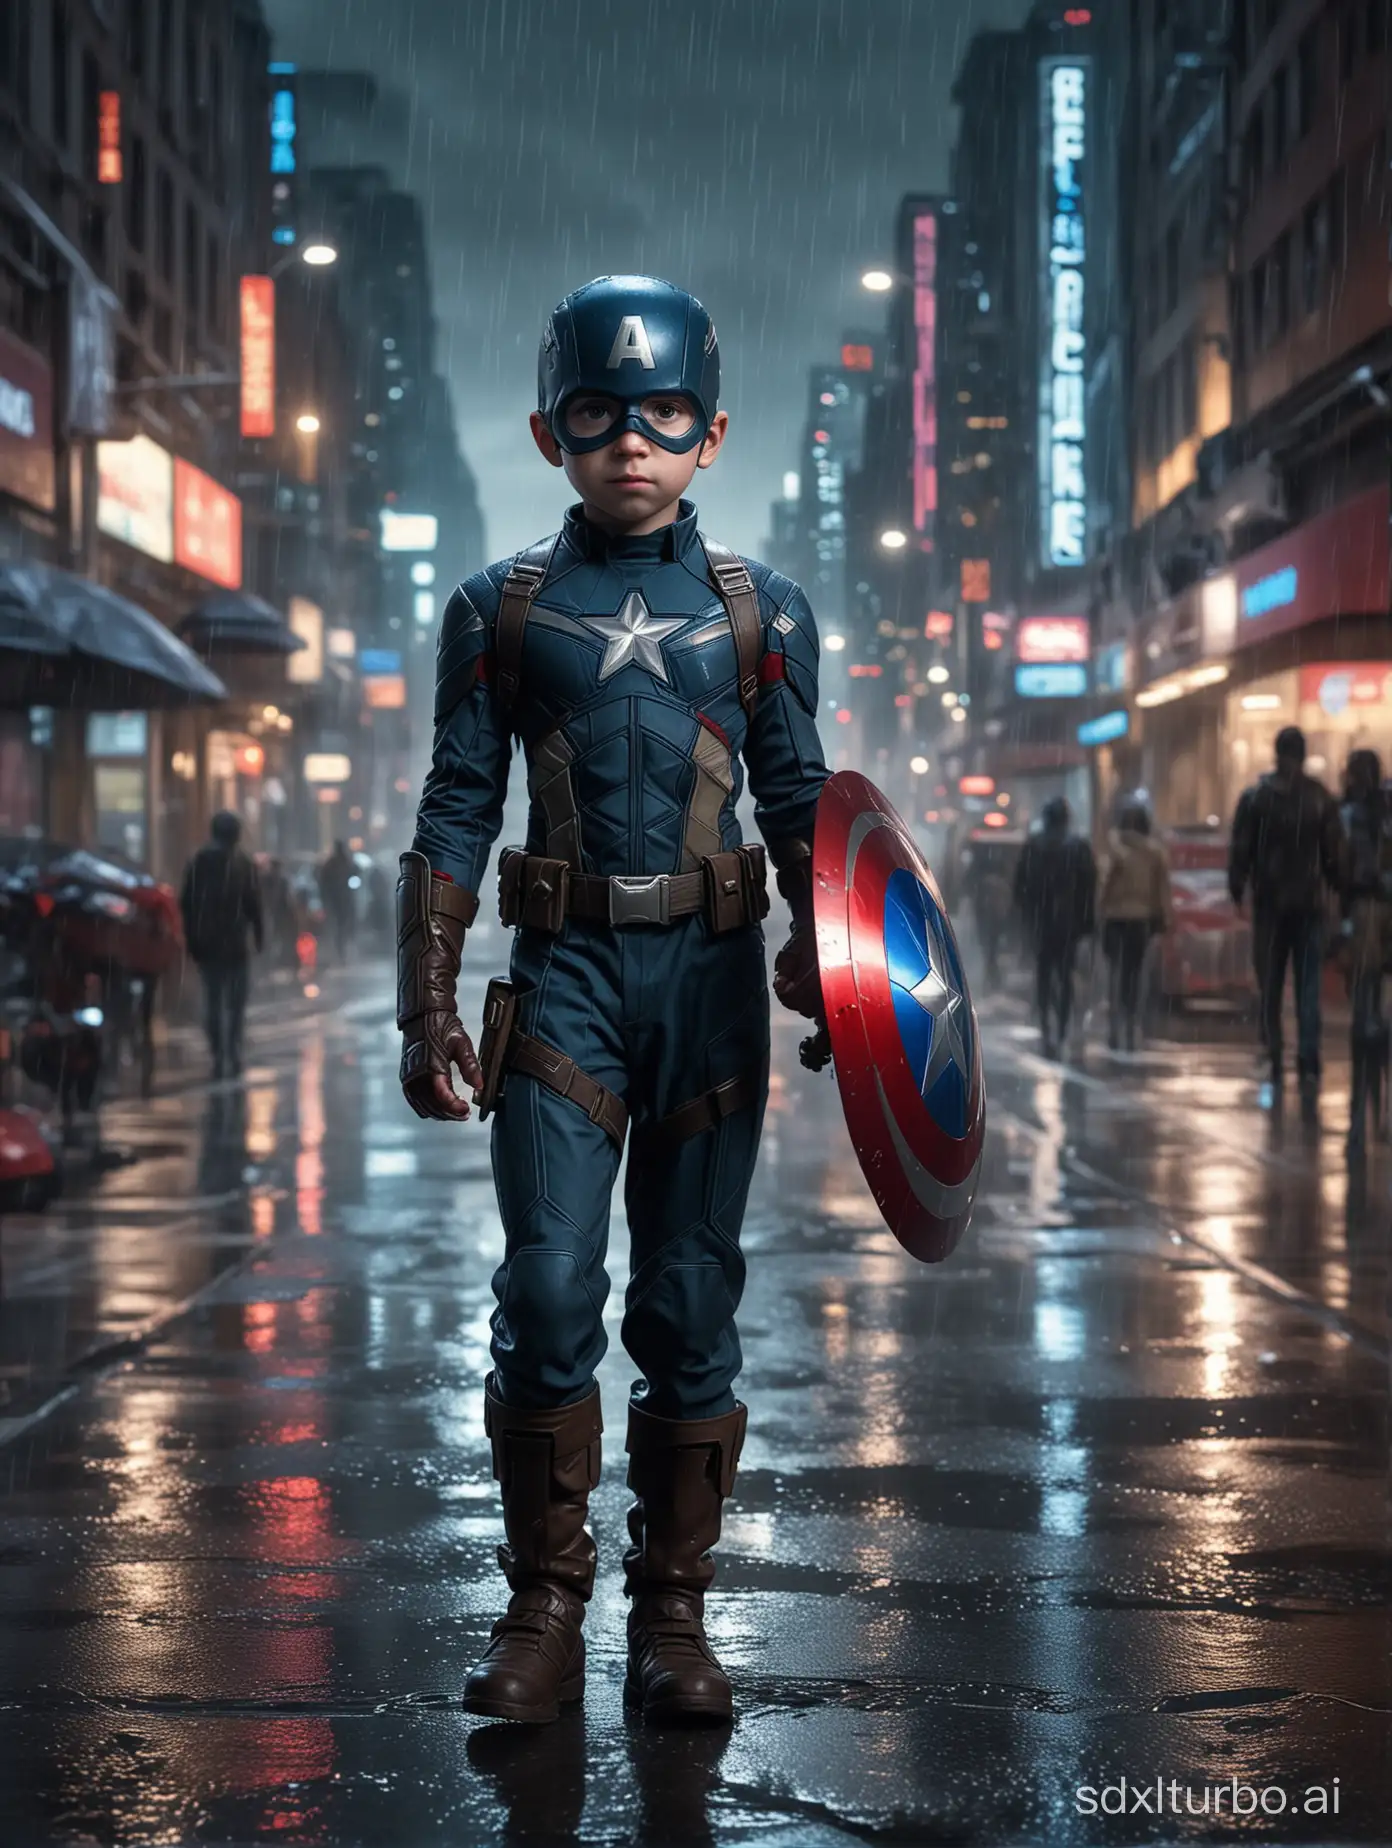 Child-as-Captain-America-in-Cyber-City-Night-Scene